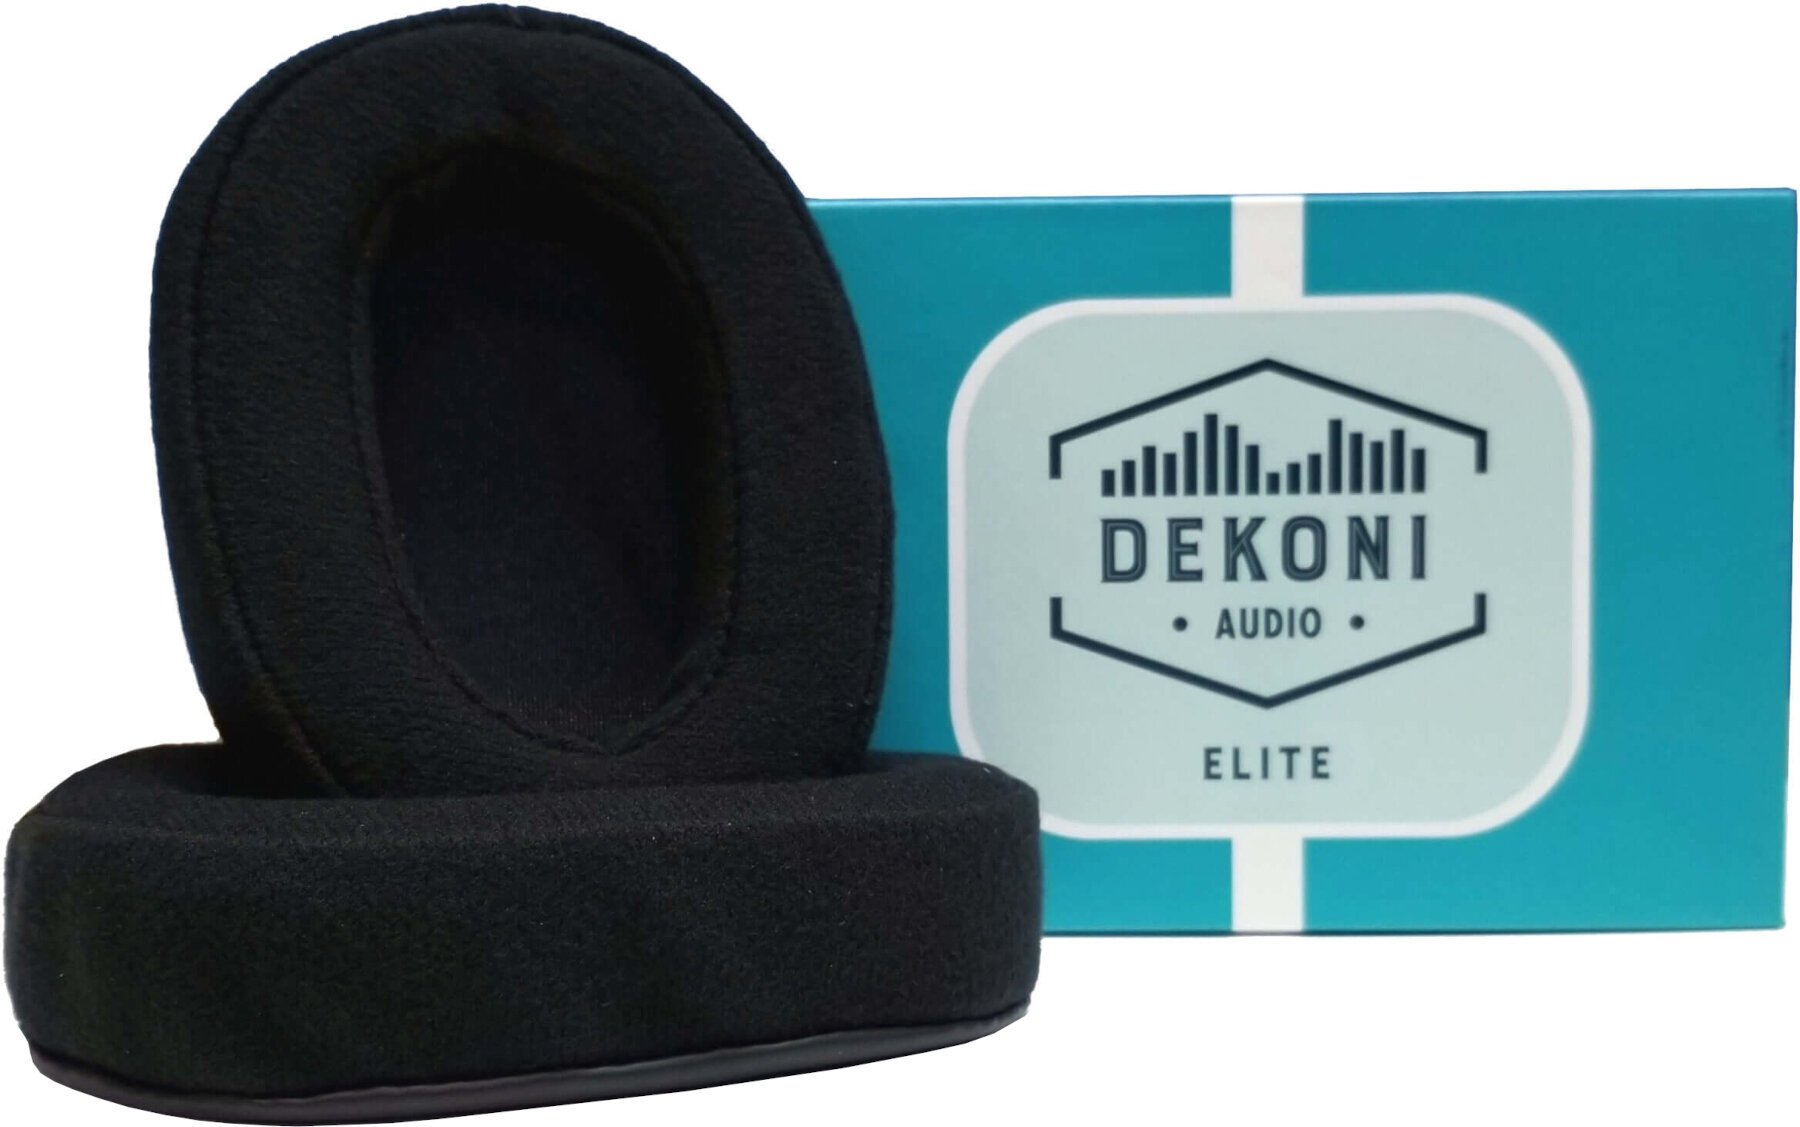 Ear Pads for headphones Dekoni Audio EPZ-K371-ELVL Ear Pads for headphones Black